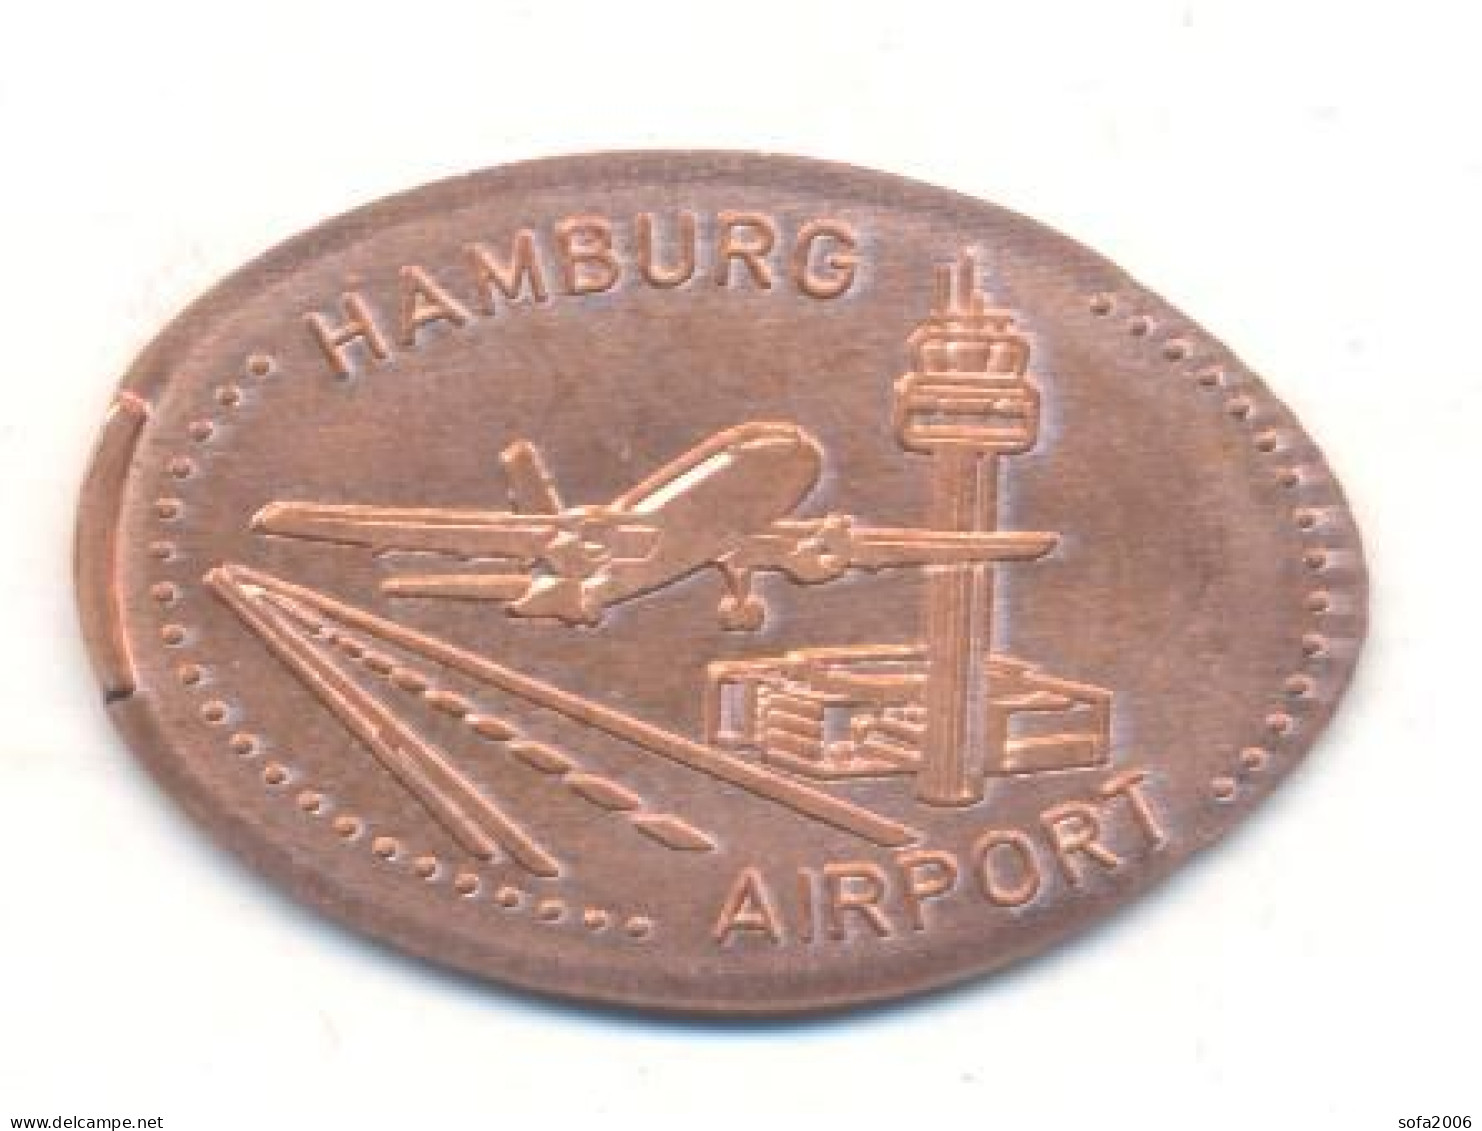 Souvenir Jeton Token Germany-Deutschland Hamburg Airport - Souvenirmunten (elongated Coins)